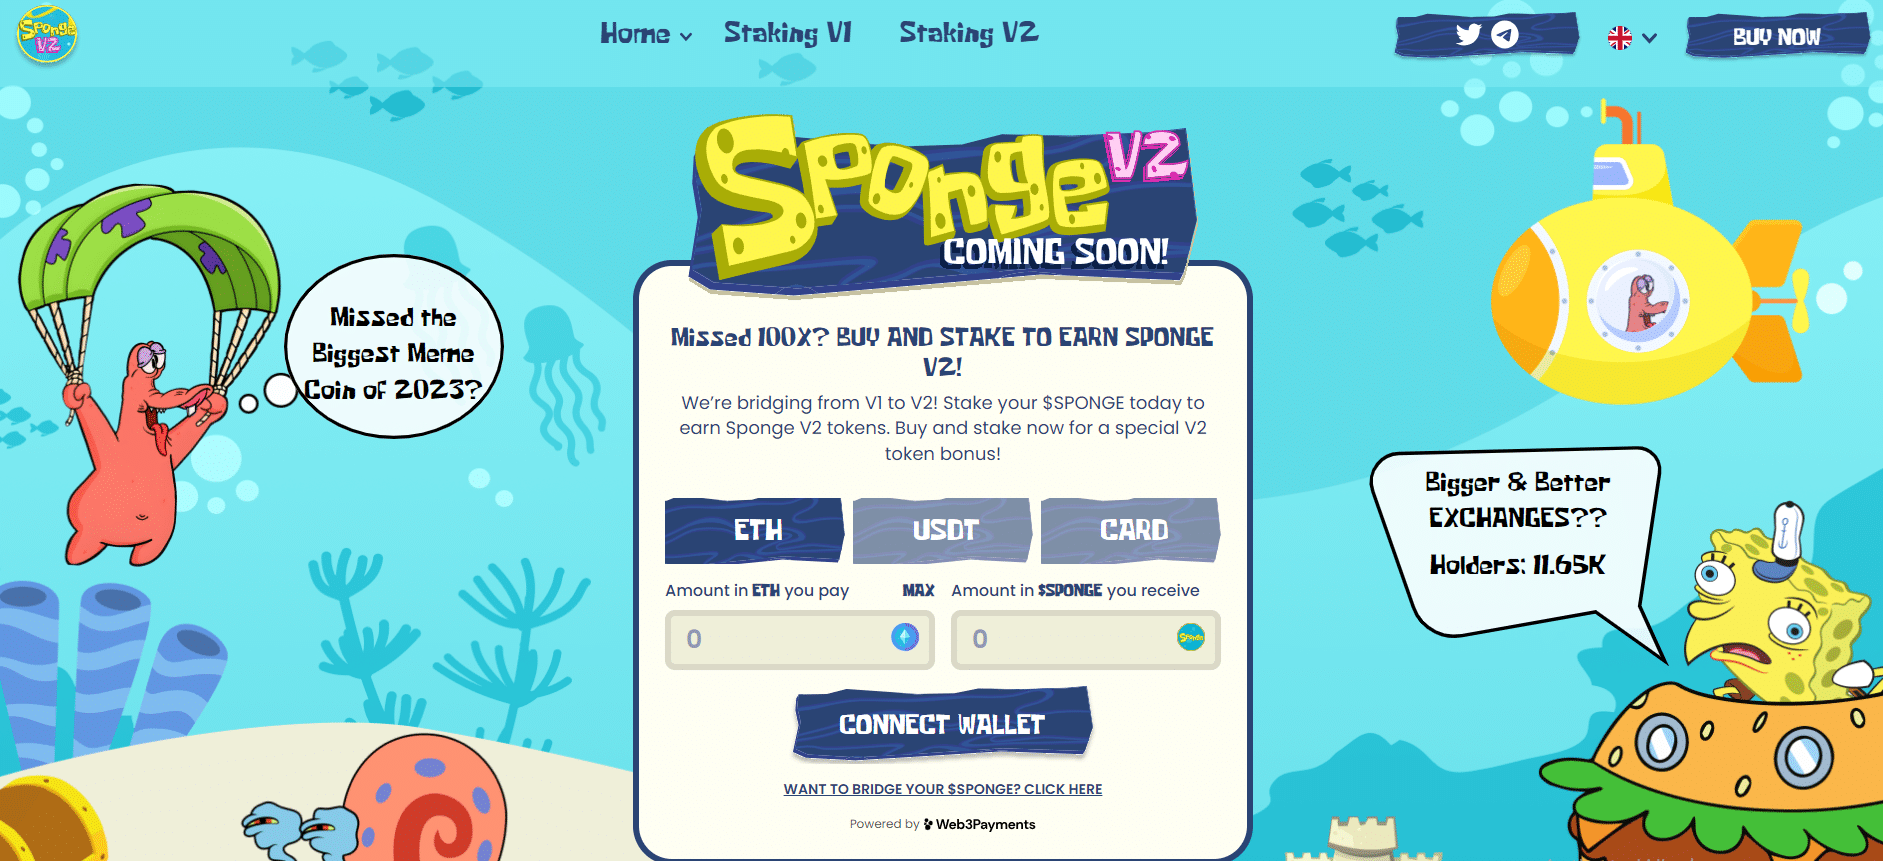 SpongeBob v2 homepage